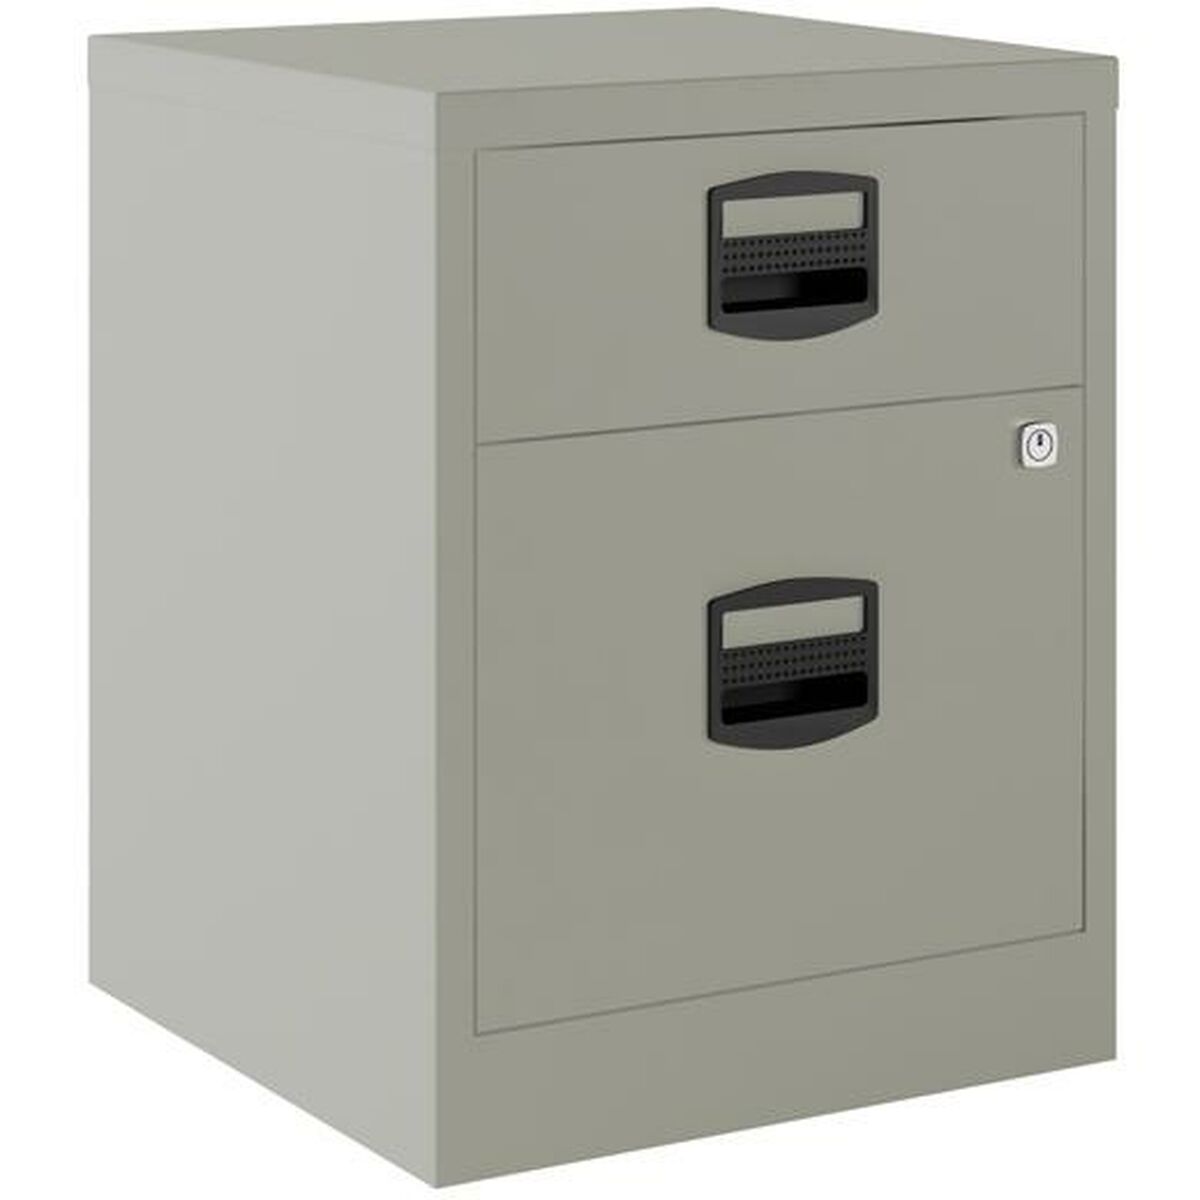 Chest of drawers Bisley Grey Metal Steel (52 x 41 x 40 cm)